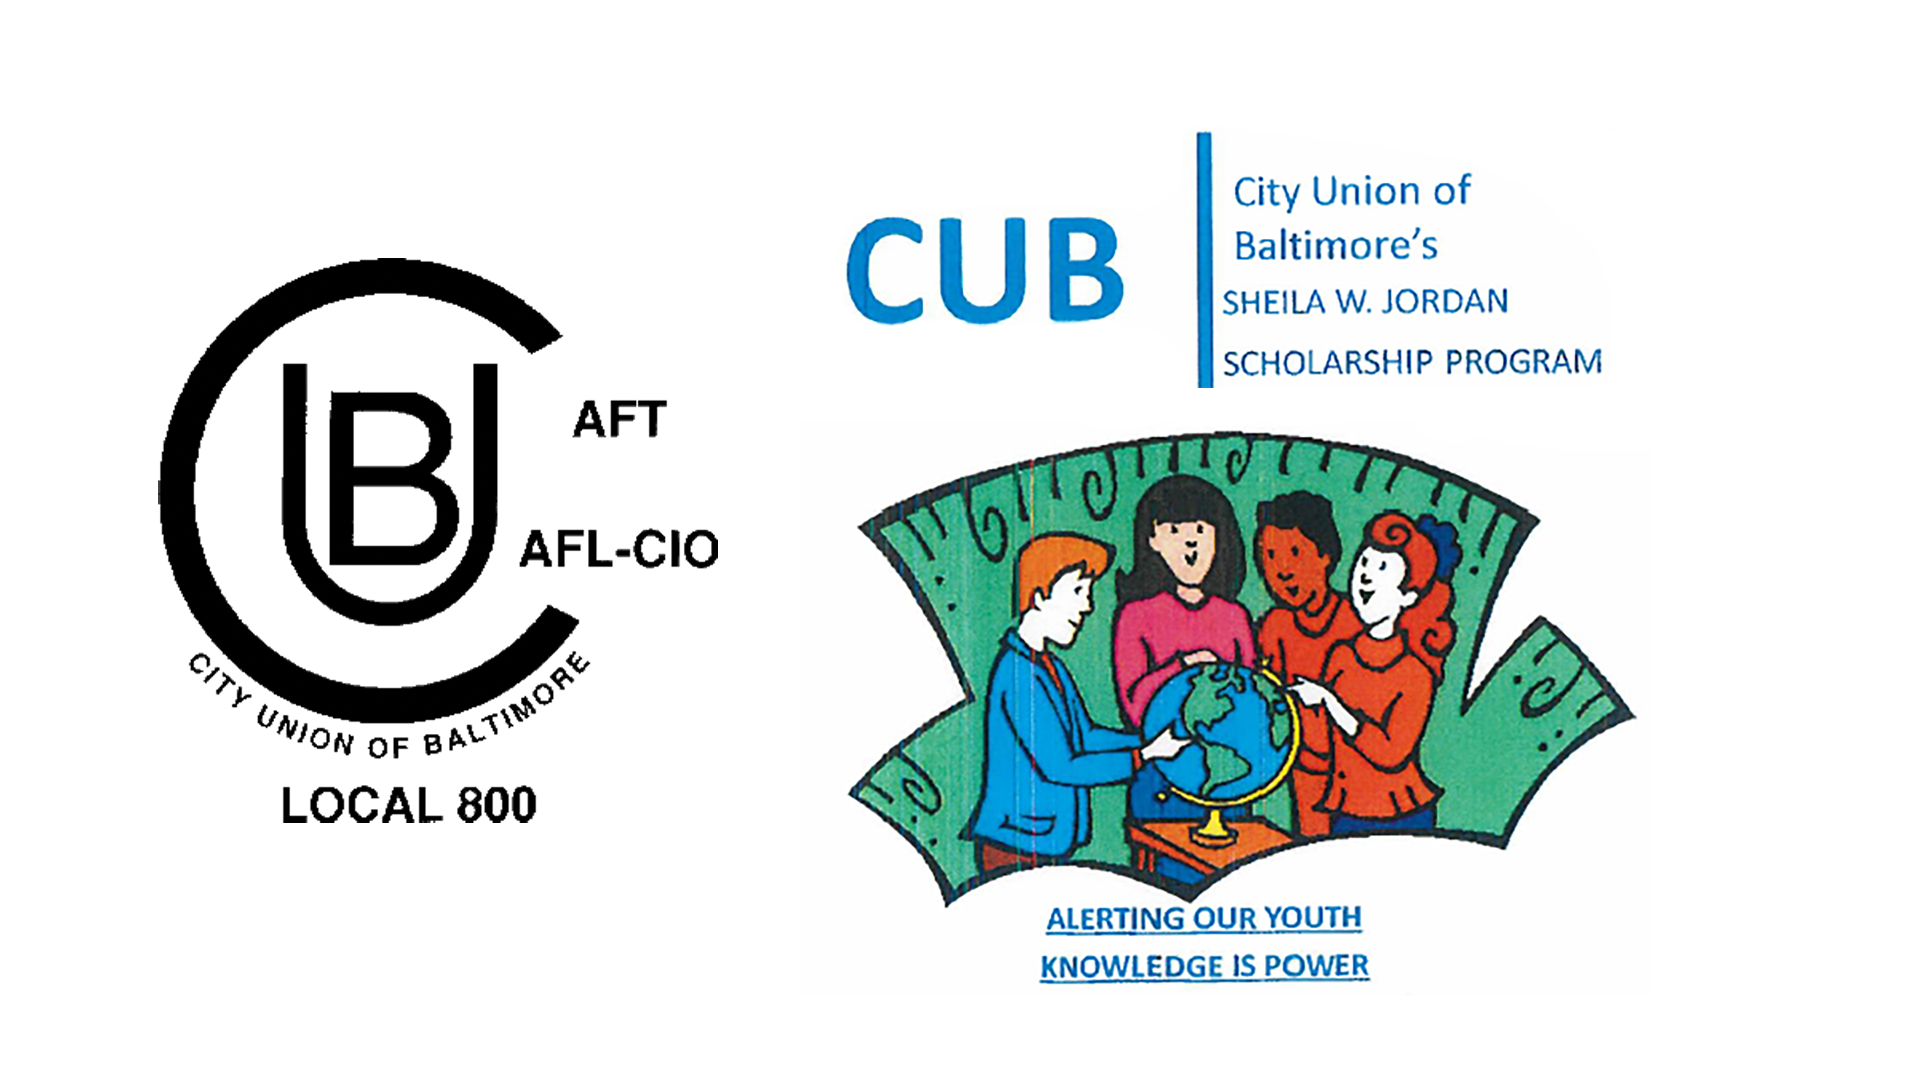 CUB SWJ Scholarship Program